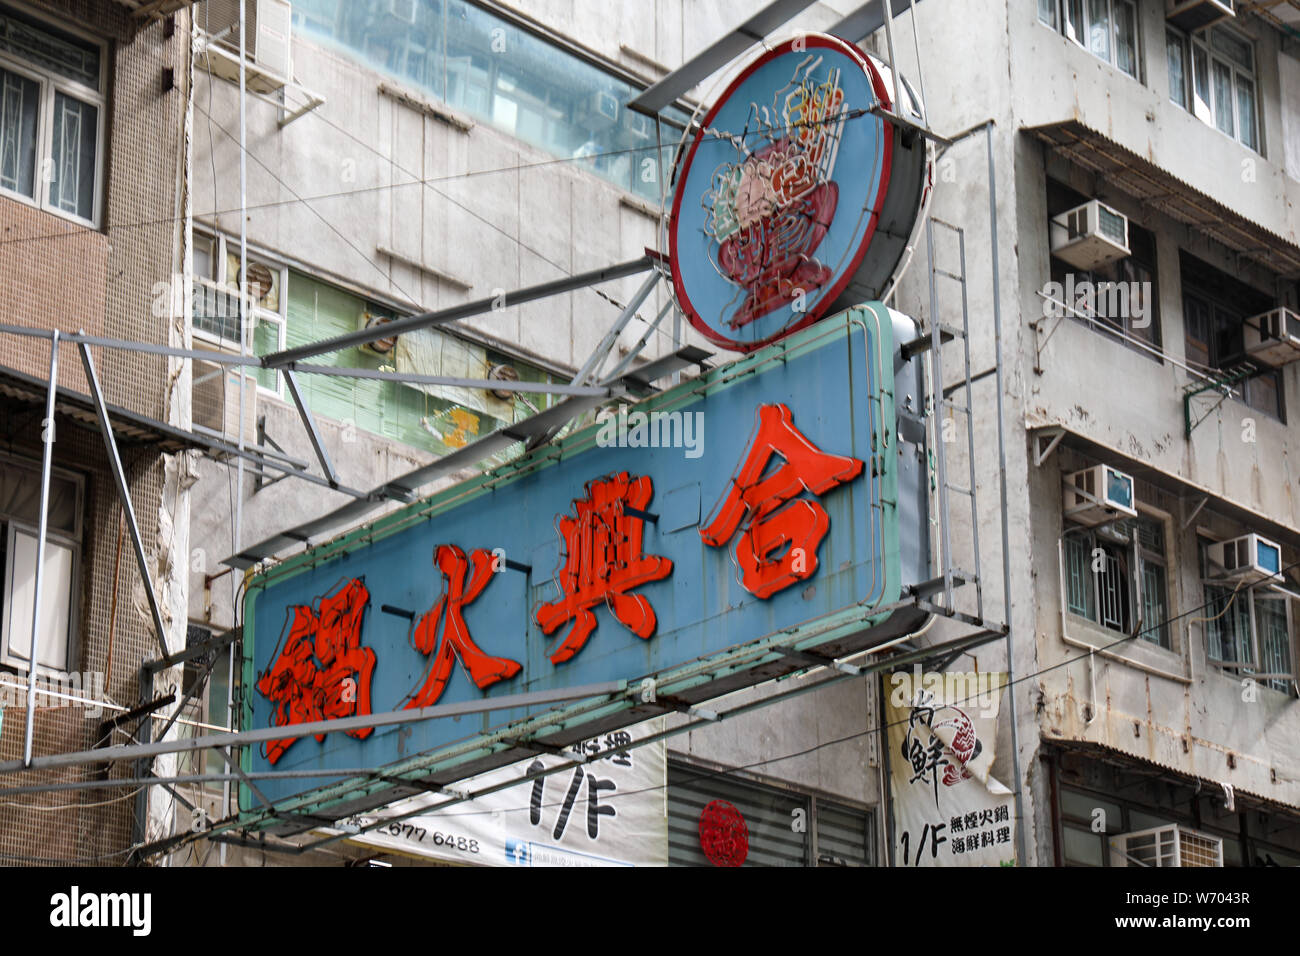 Immagine diurna di weathered vecchia insegna al neon con caratteri cinesi in Yau Ma Tei, Hong Kong Foto Stock